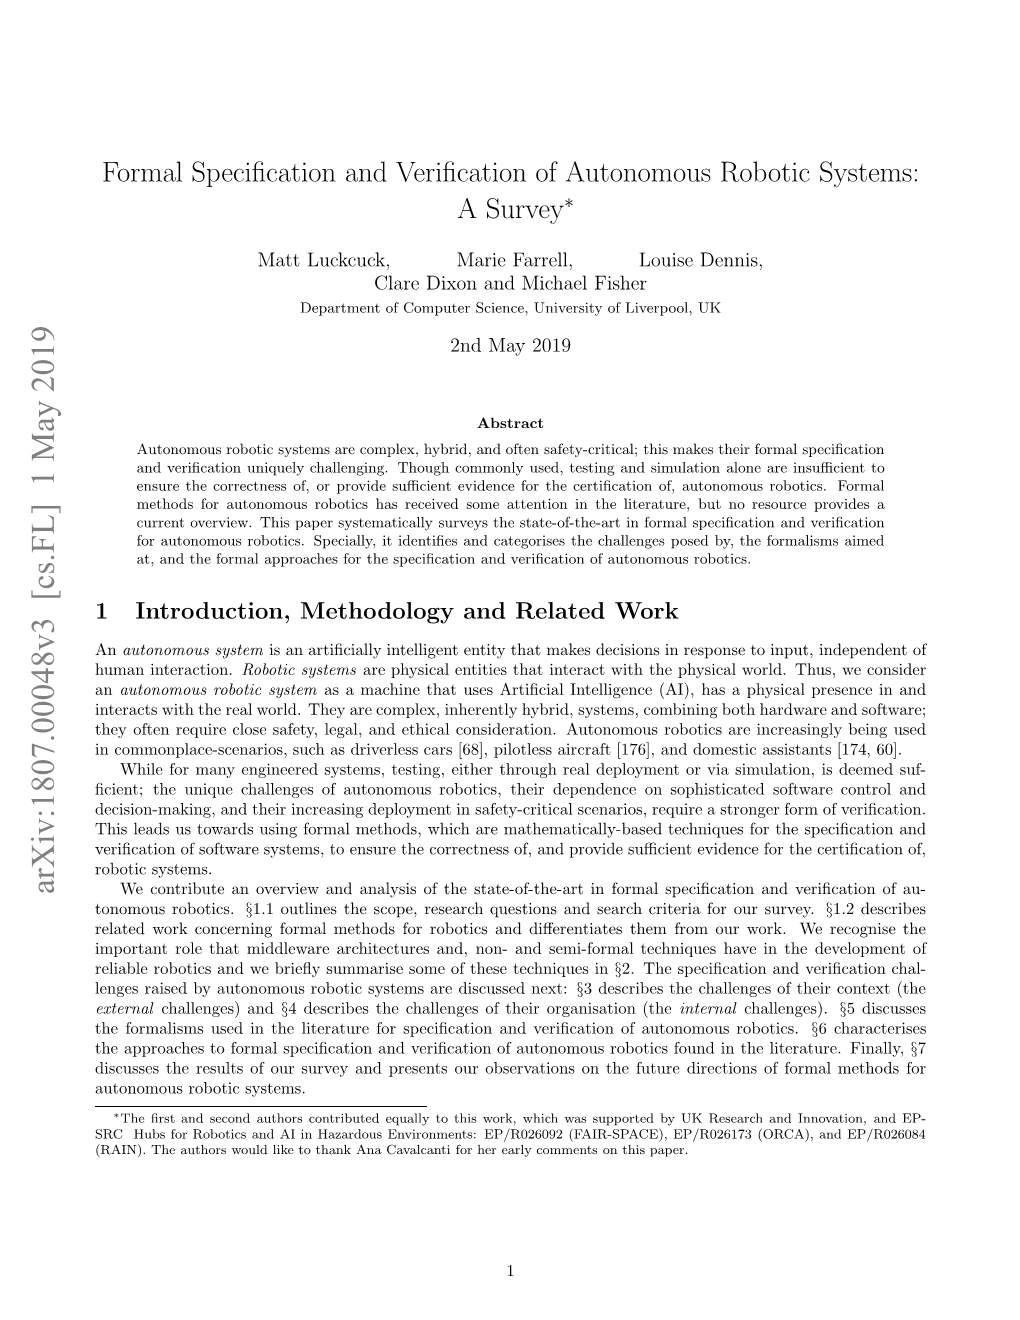 Formal Specification and Verification of Autonomous Robotic Systems: a Survey